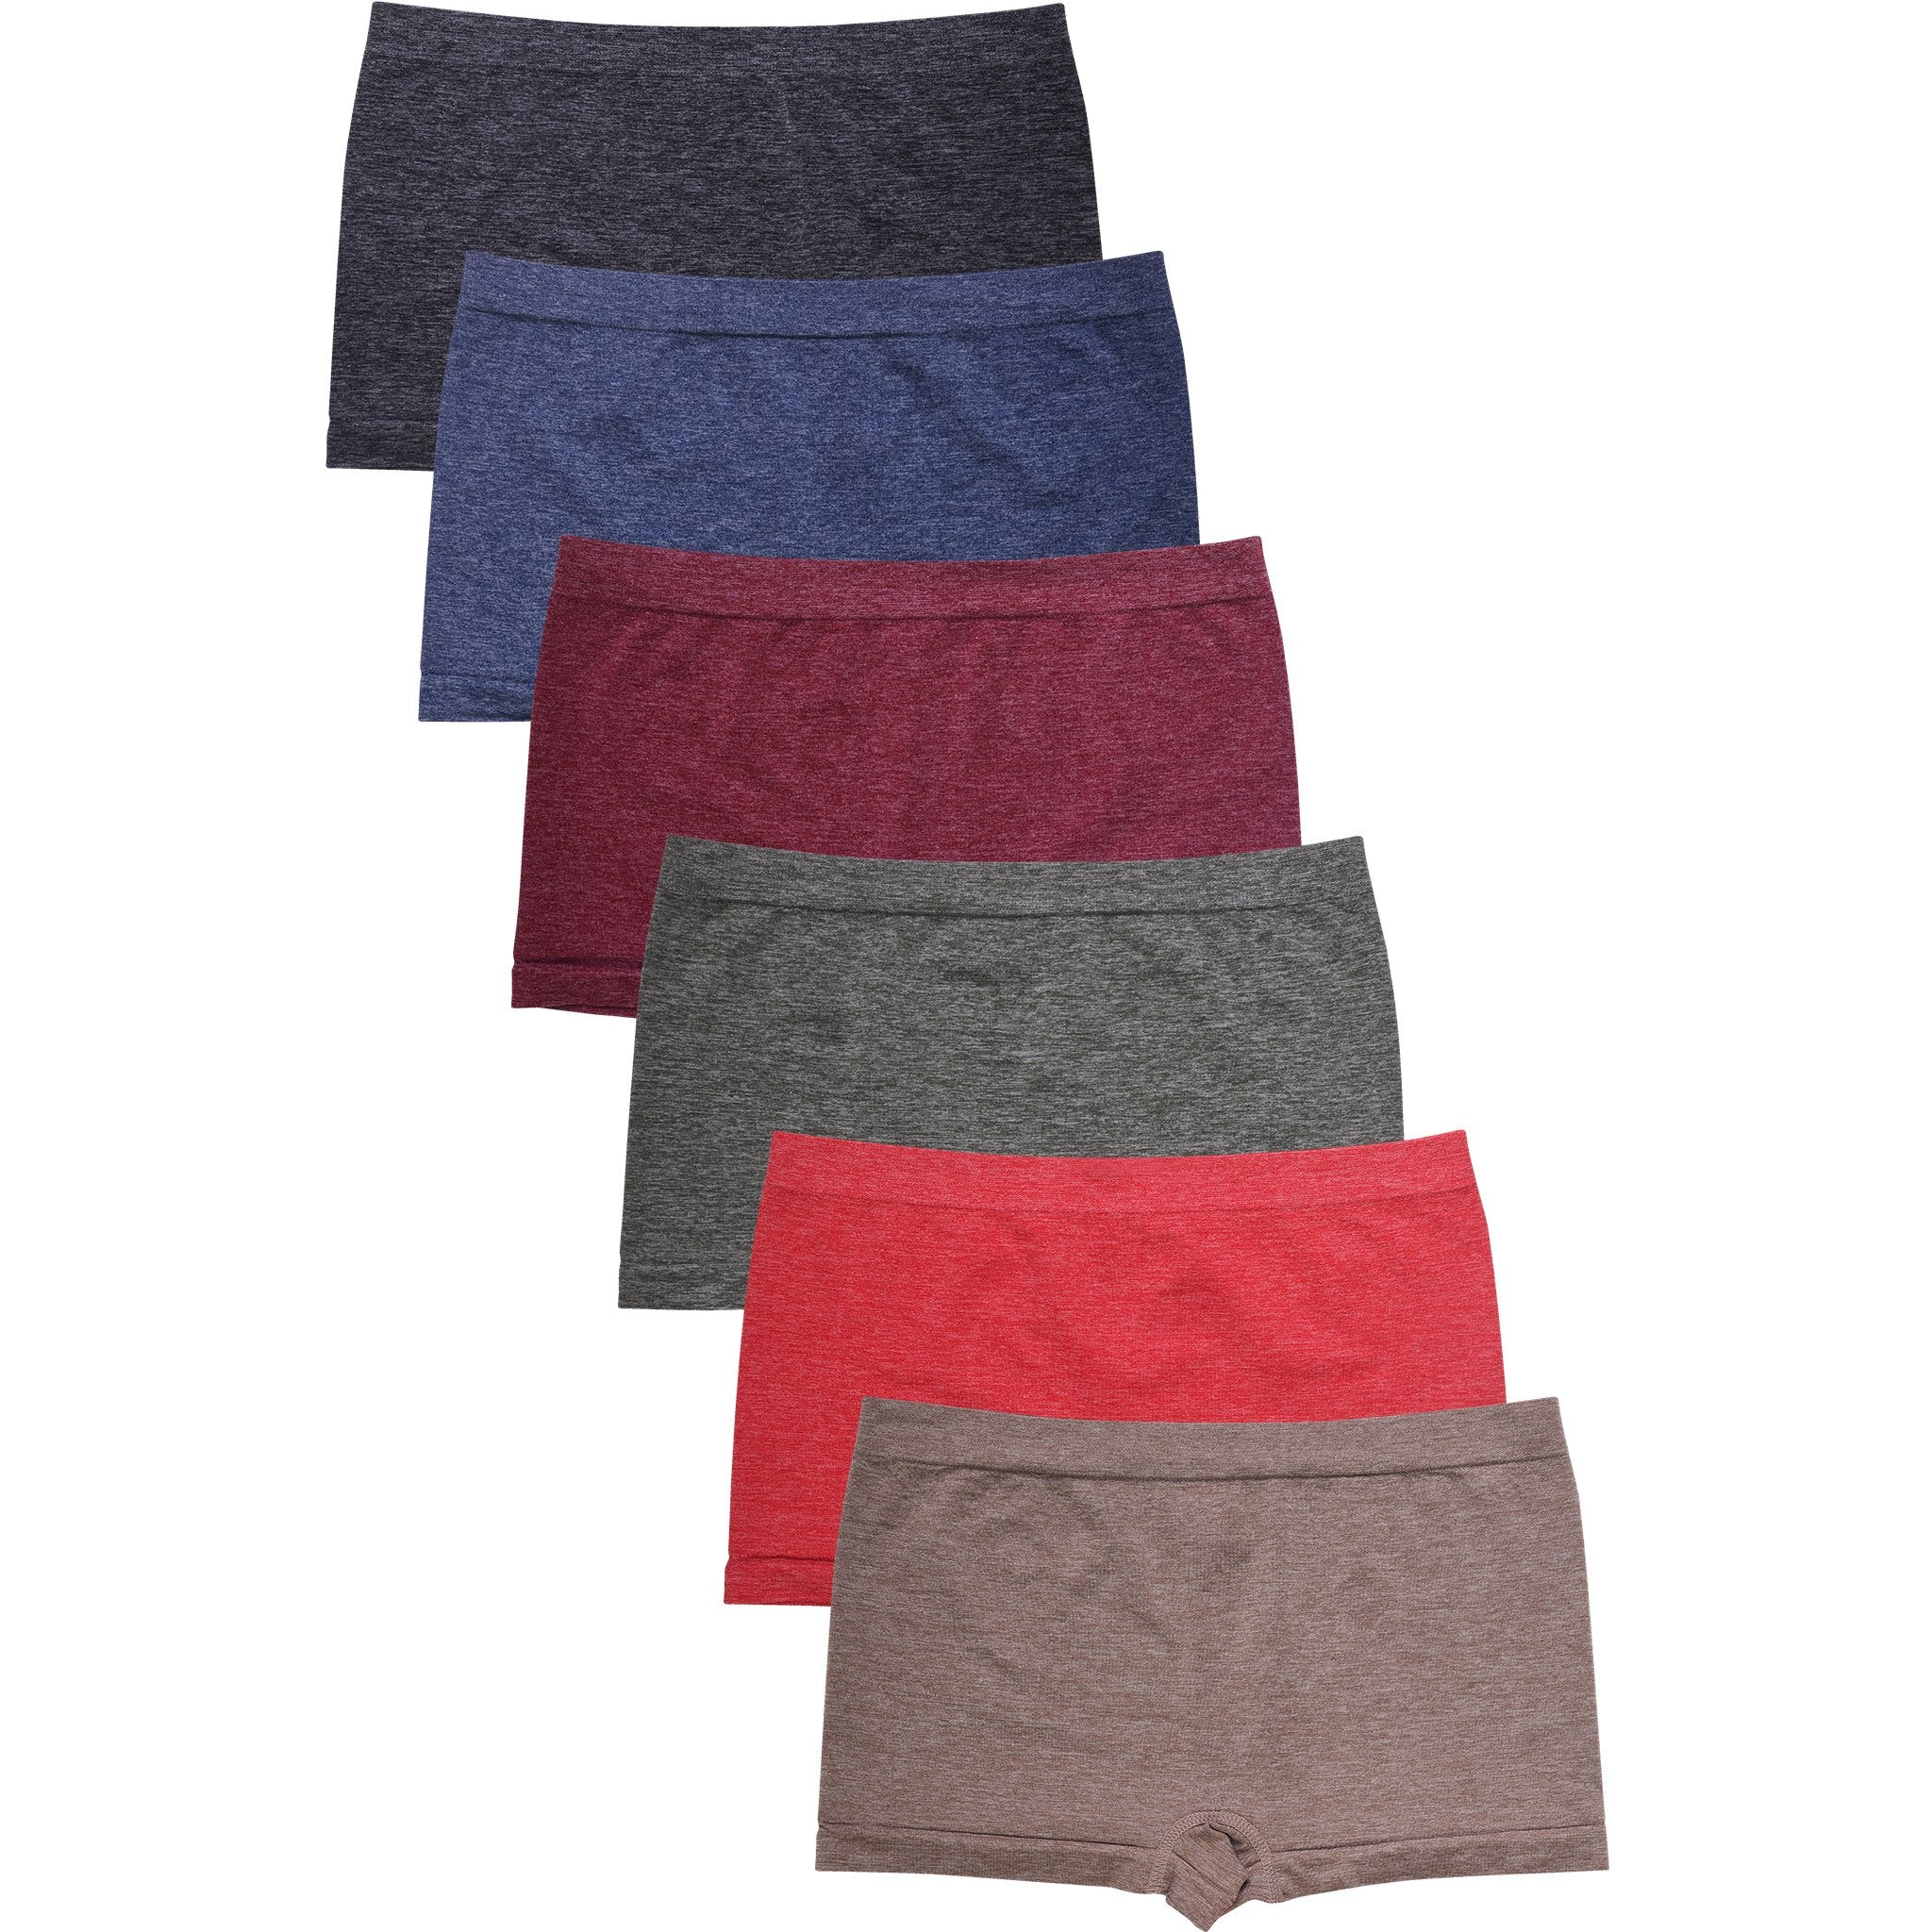 GLAMORAS Women Nylon Spandex Seamless Boyshort Panties, Free Size, Pack of  4, Red, Black, Beige, Pink